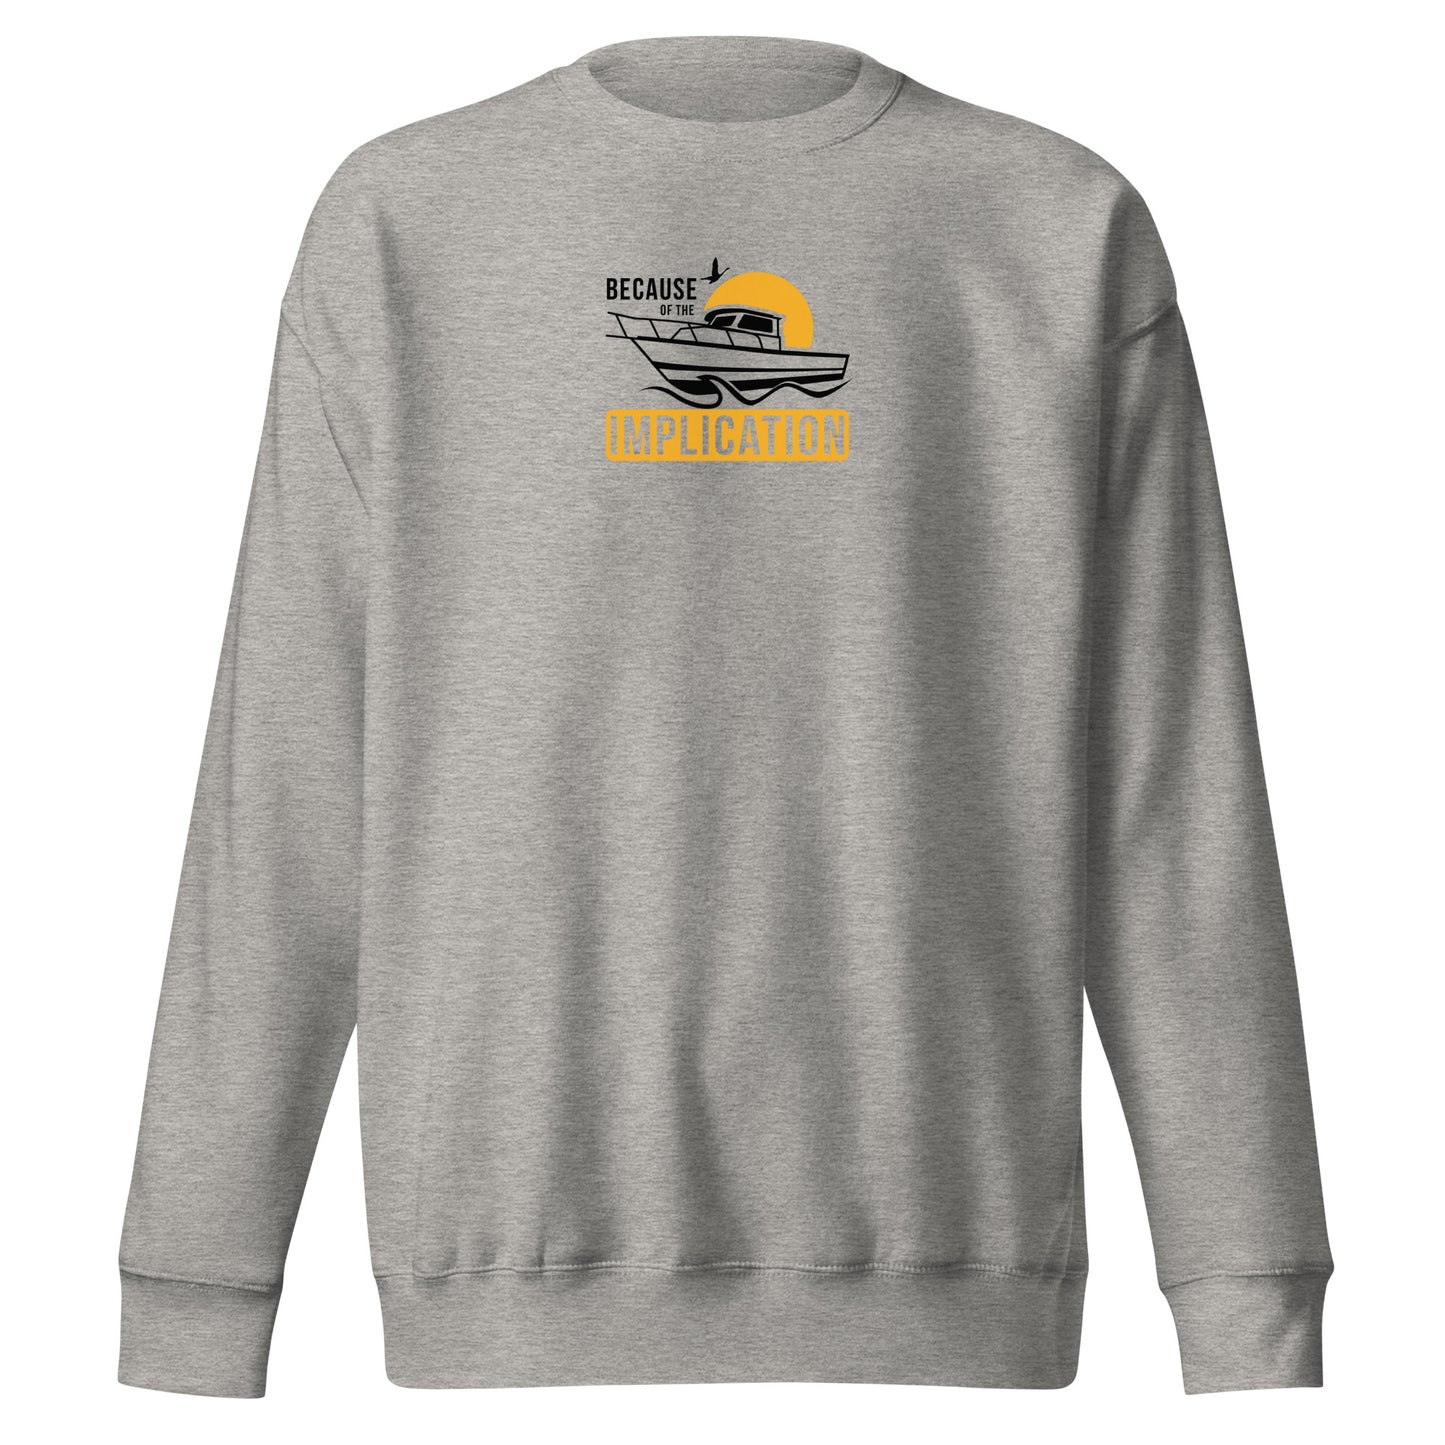 Because of the Implication Boat Unisex Premium Sweatshirt